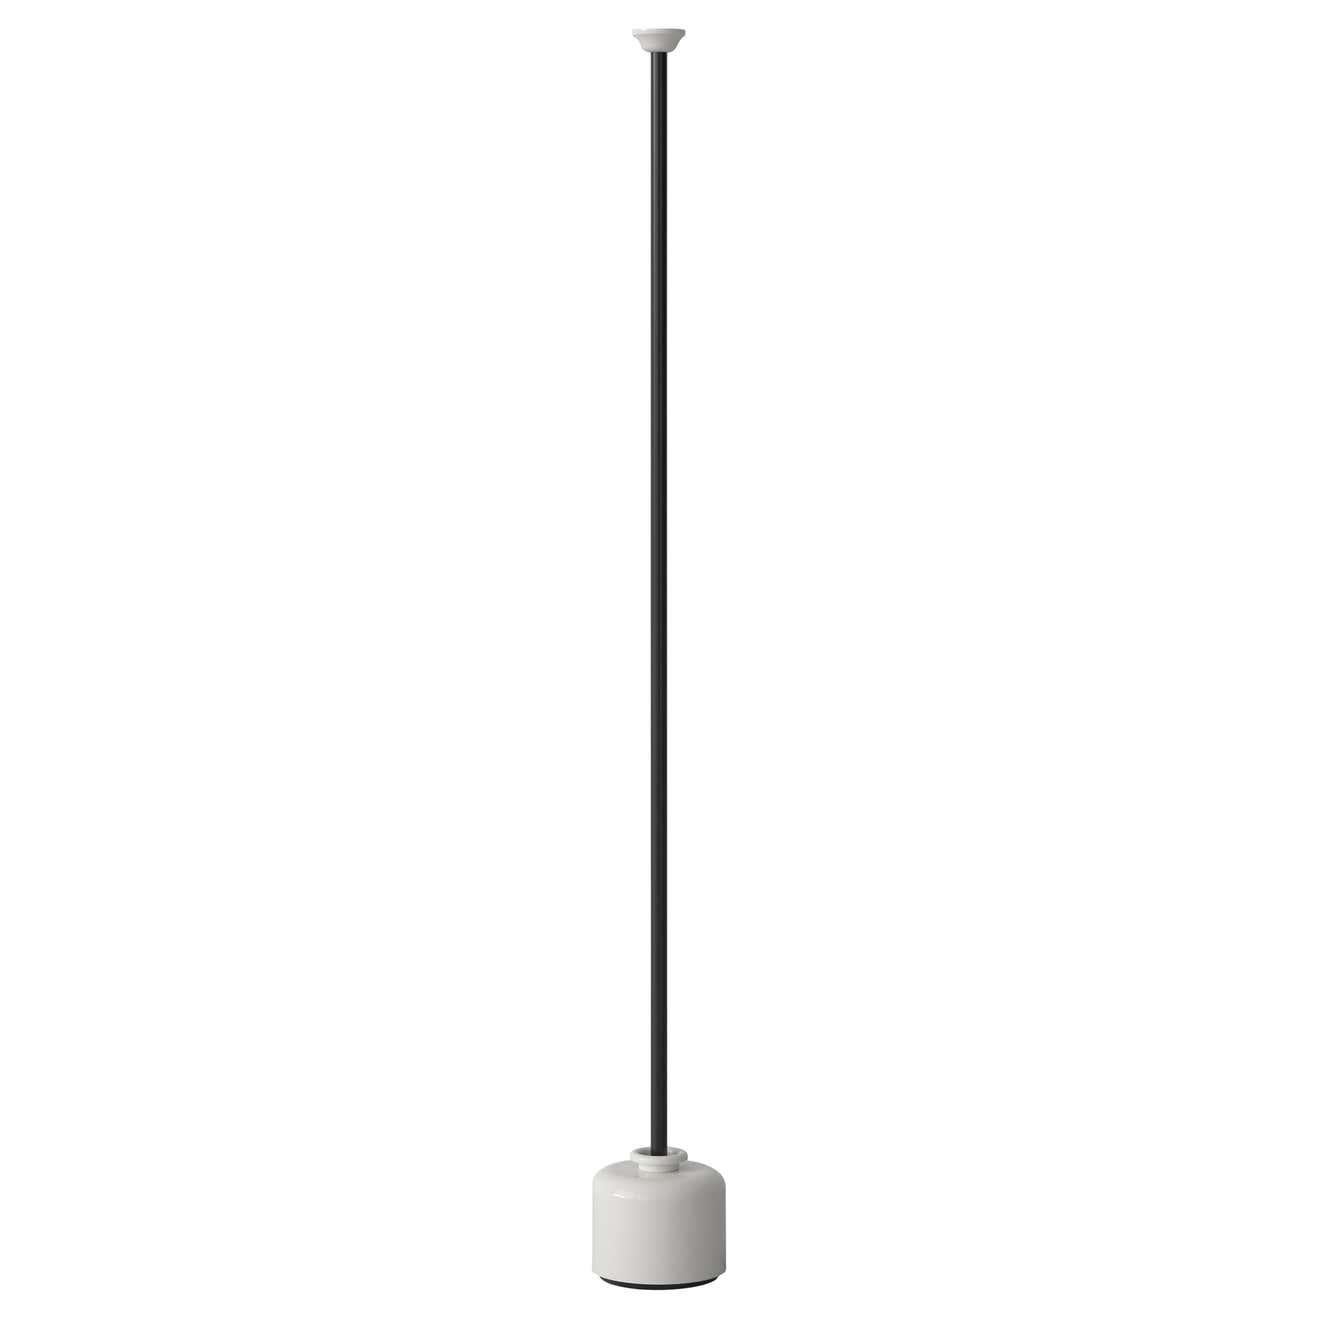 Gino Sarfatti Lamp Model 1095 by Astep 2